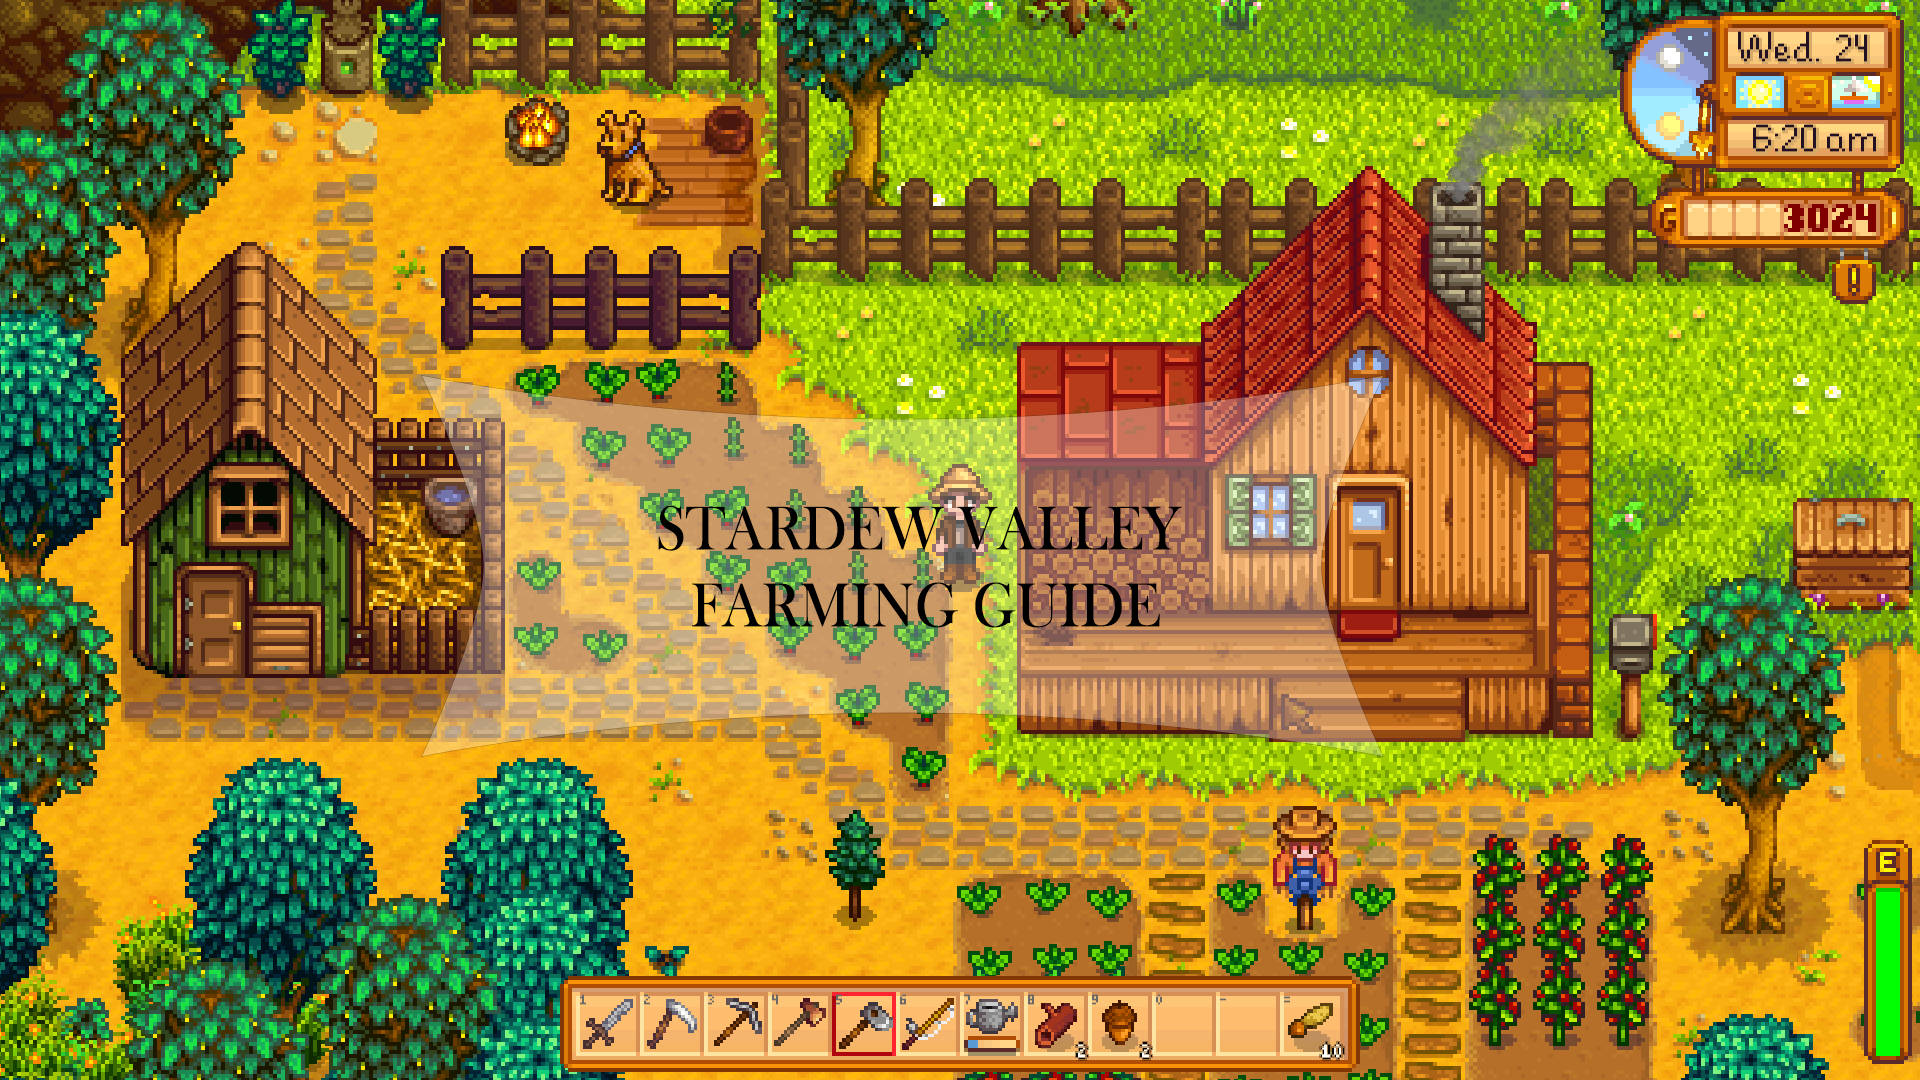 Stardew Valley Farming Guide Interface Wallpaper